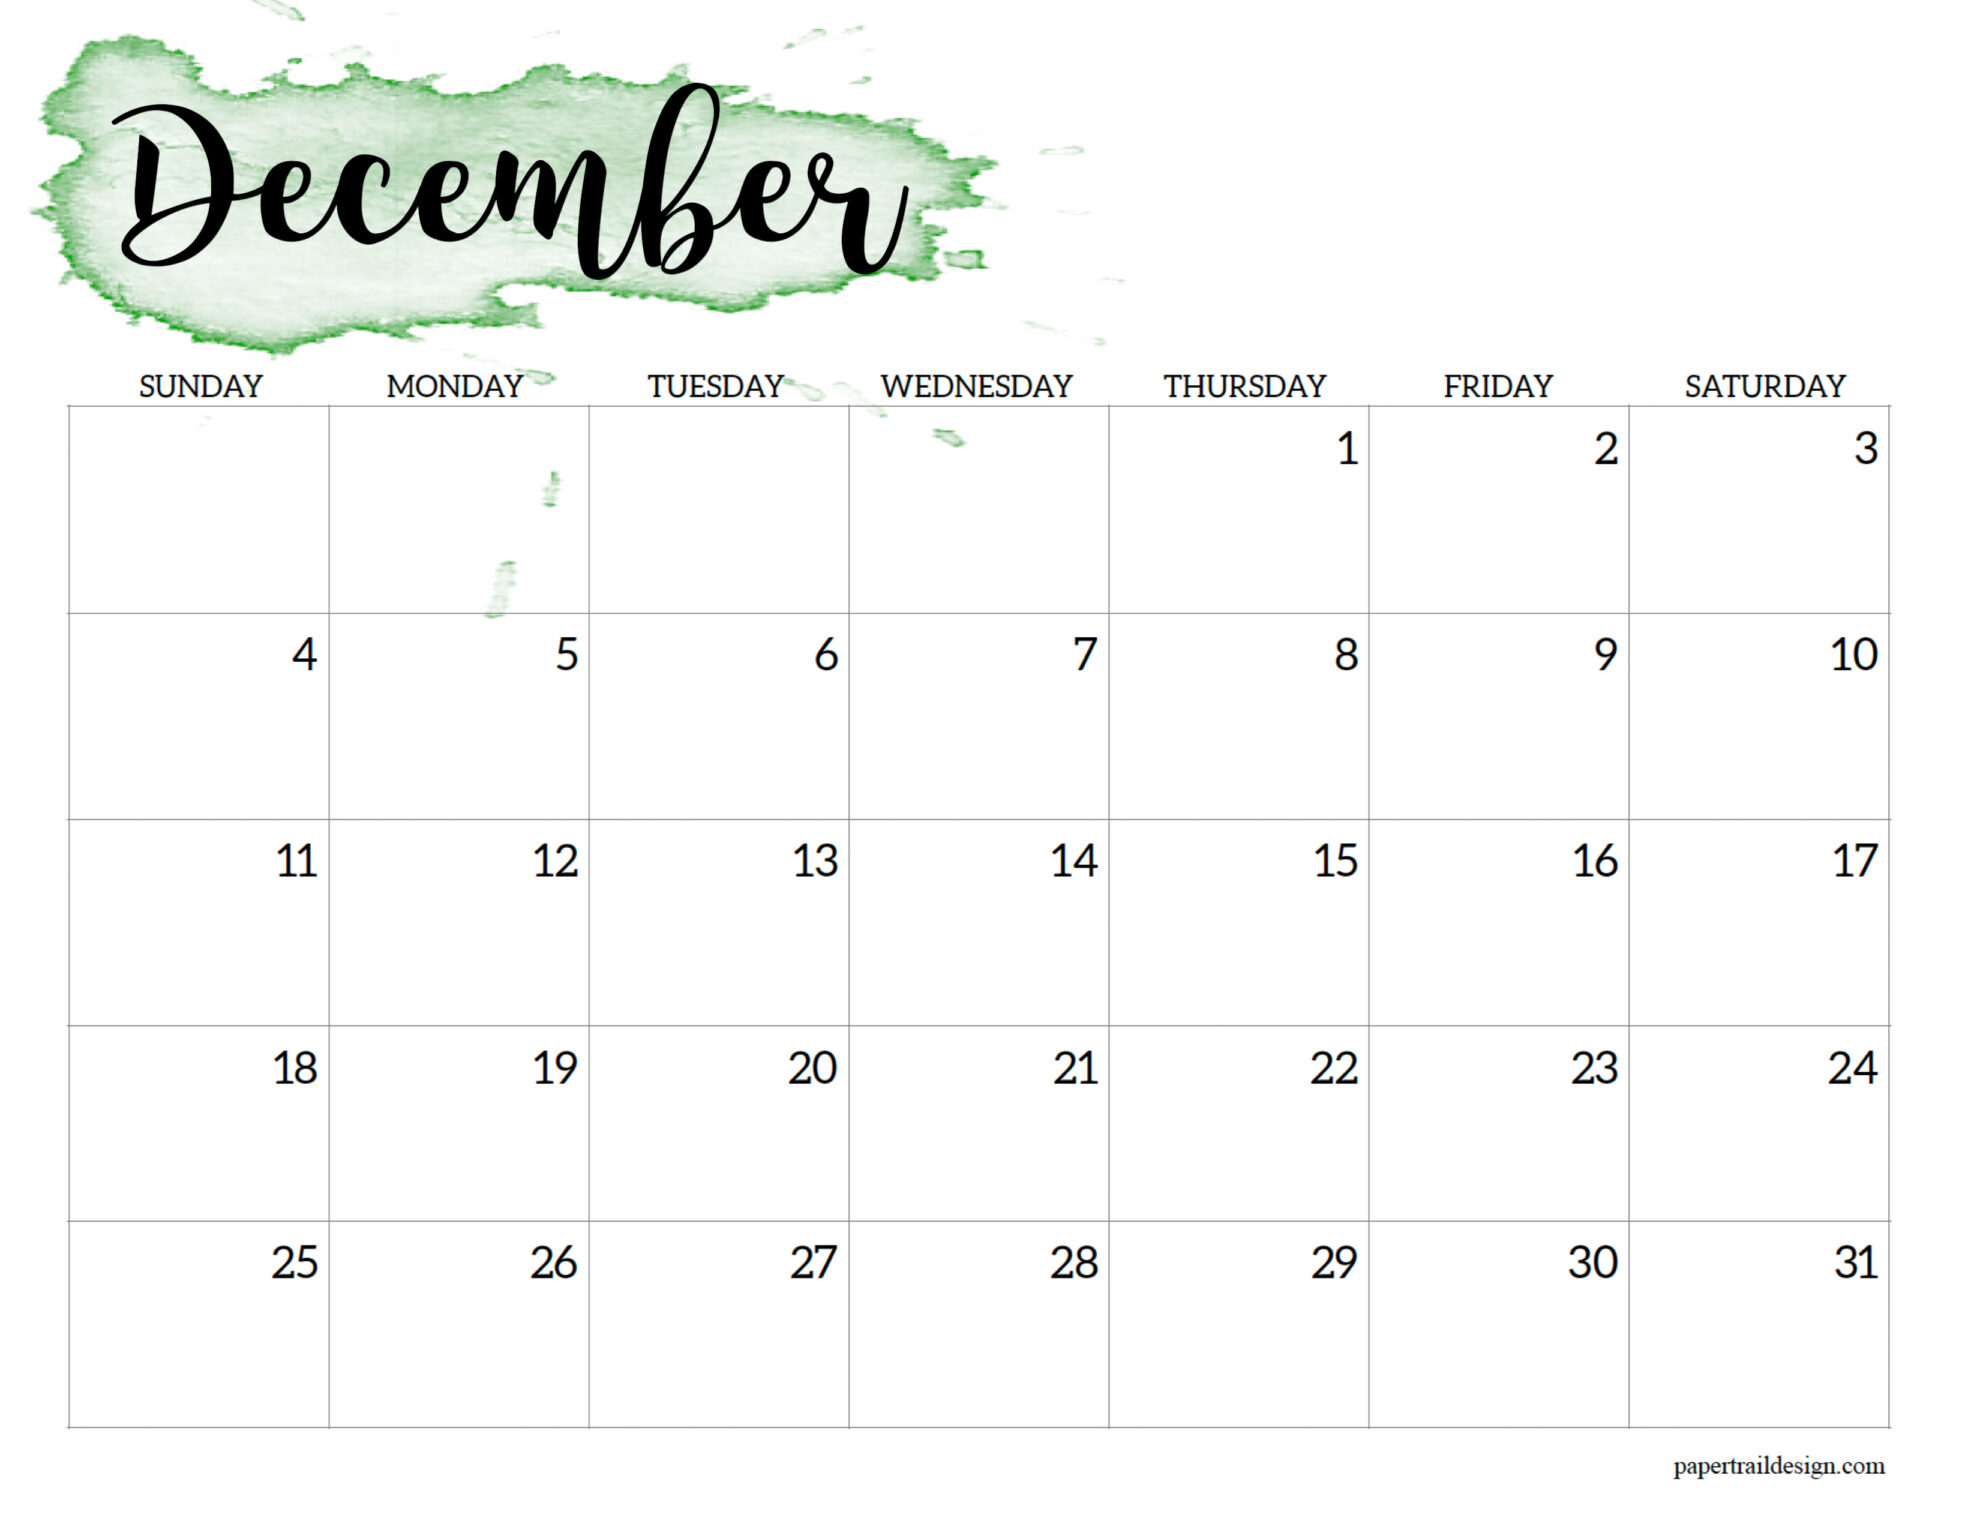 Dec Calendar 2022 Printable 2022 Calendar Printable - Watercolor - Paper Trail Design